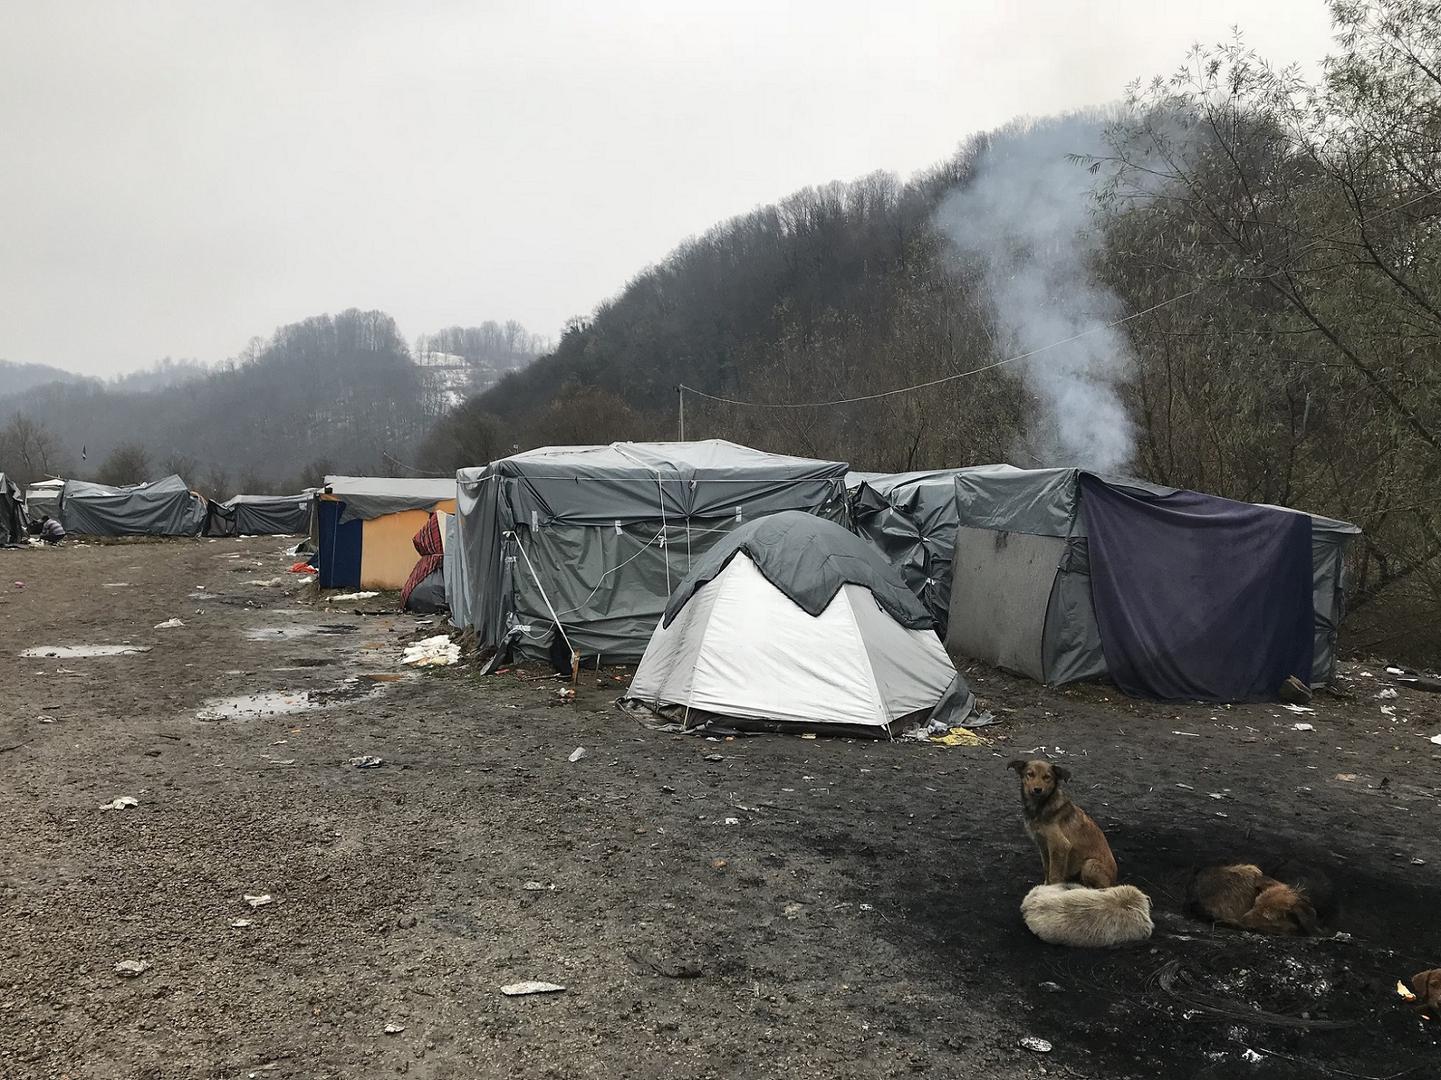 Tent camp on outskirts of Velika Kladusa, Bosnia Herzegovina, close to Croatian border, where migrants including asylum seekers sleep rough. November 21, 2018.